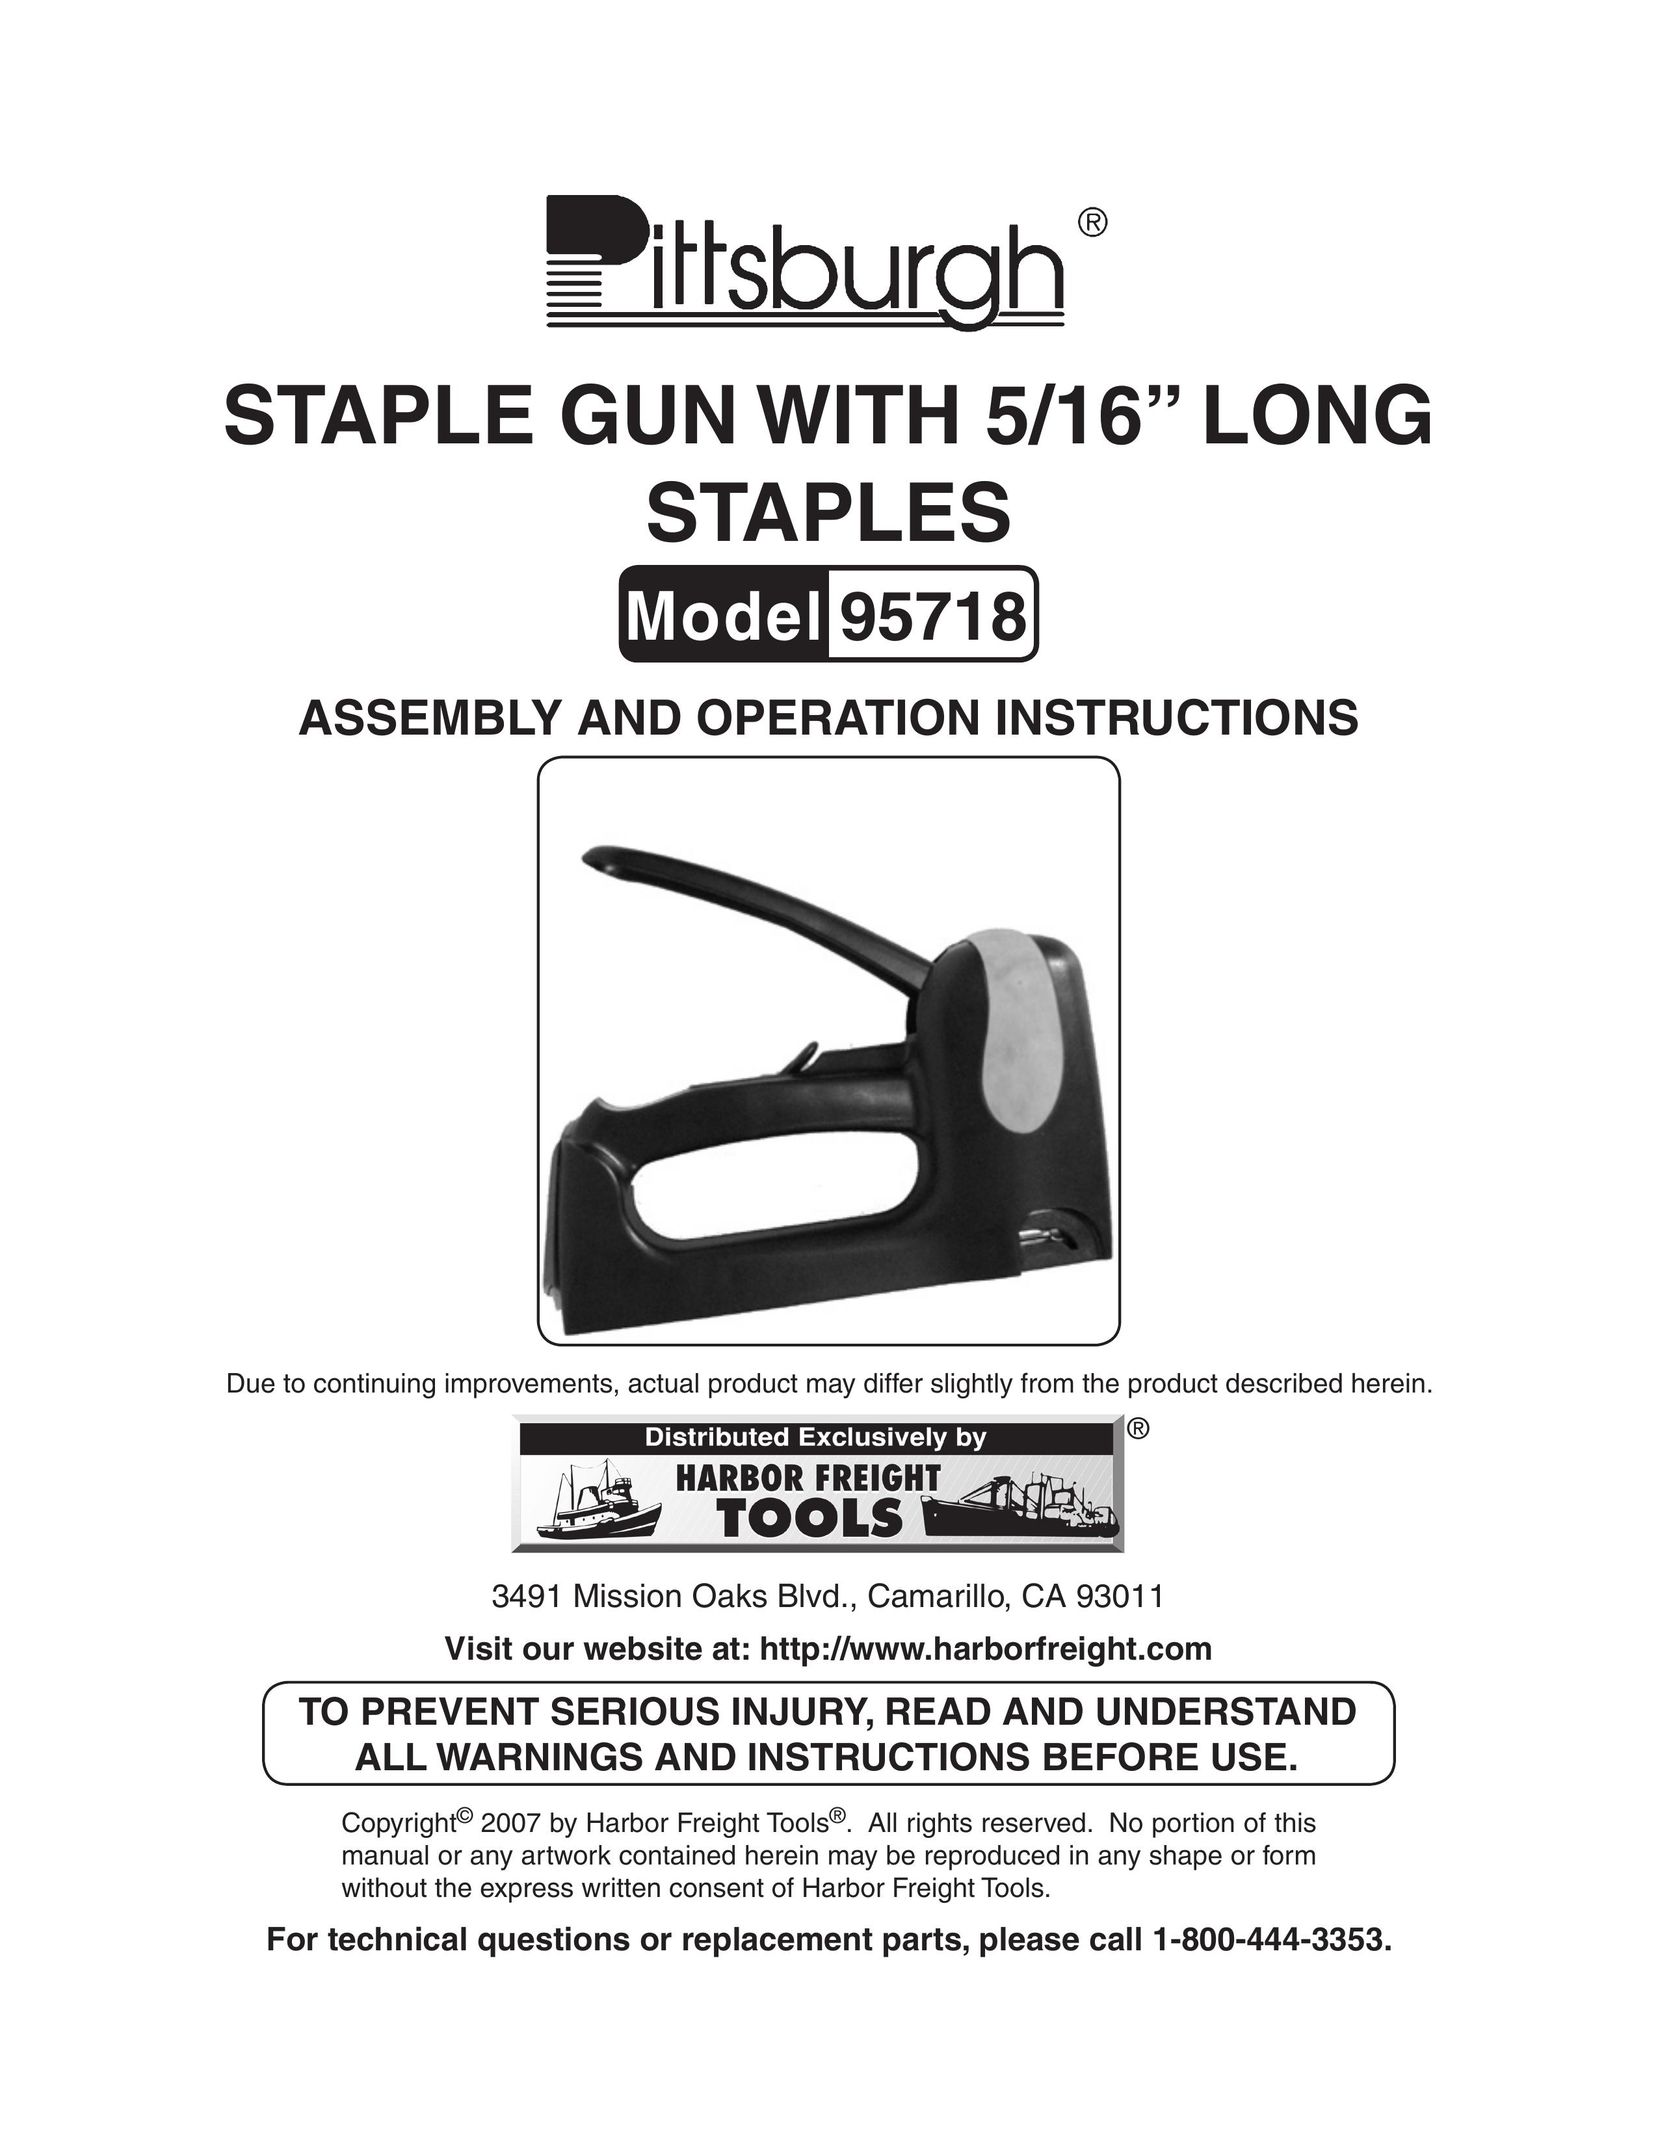 Harbor Freight Tools 95718 Nail Gun User Manual